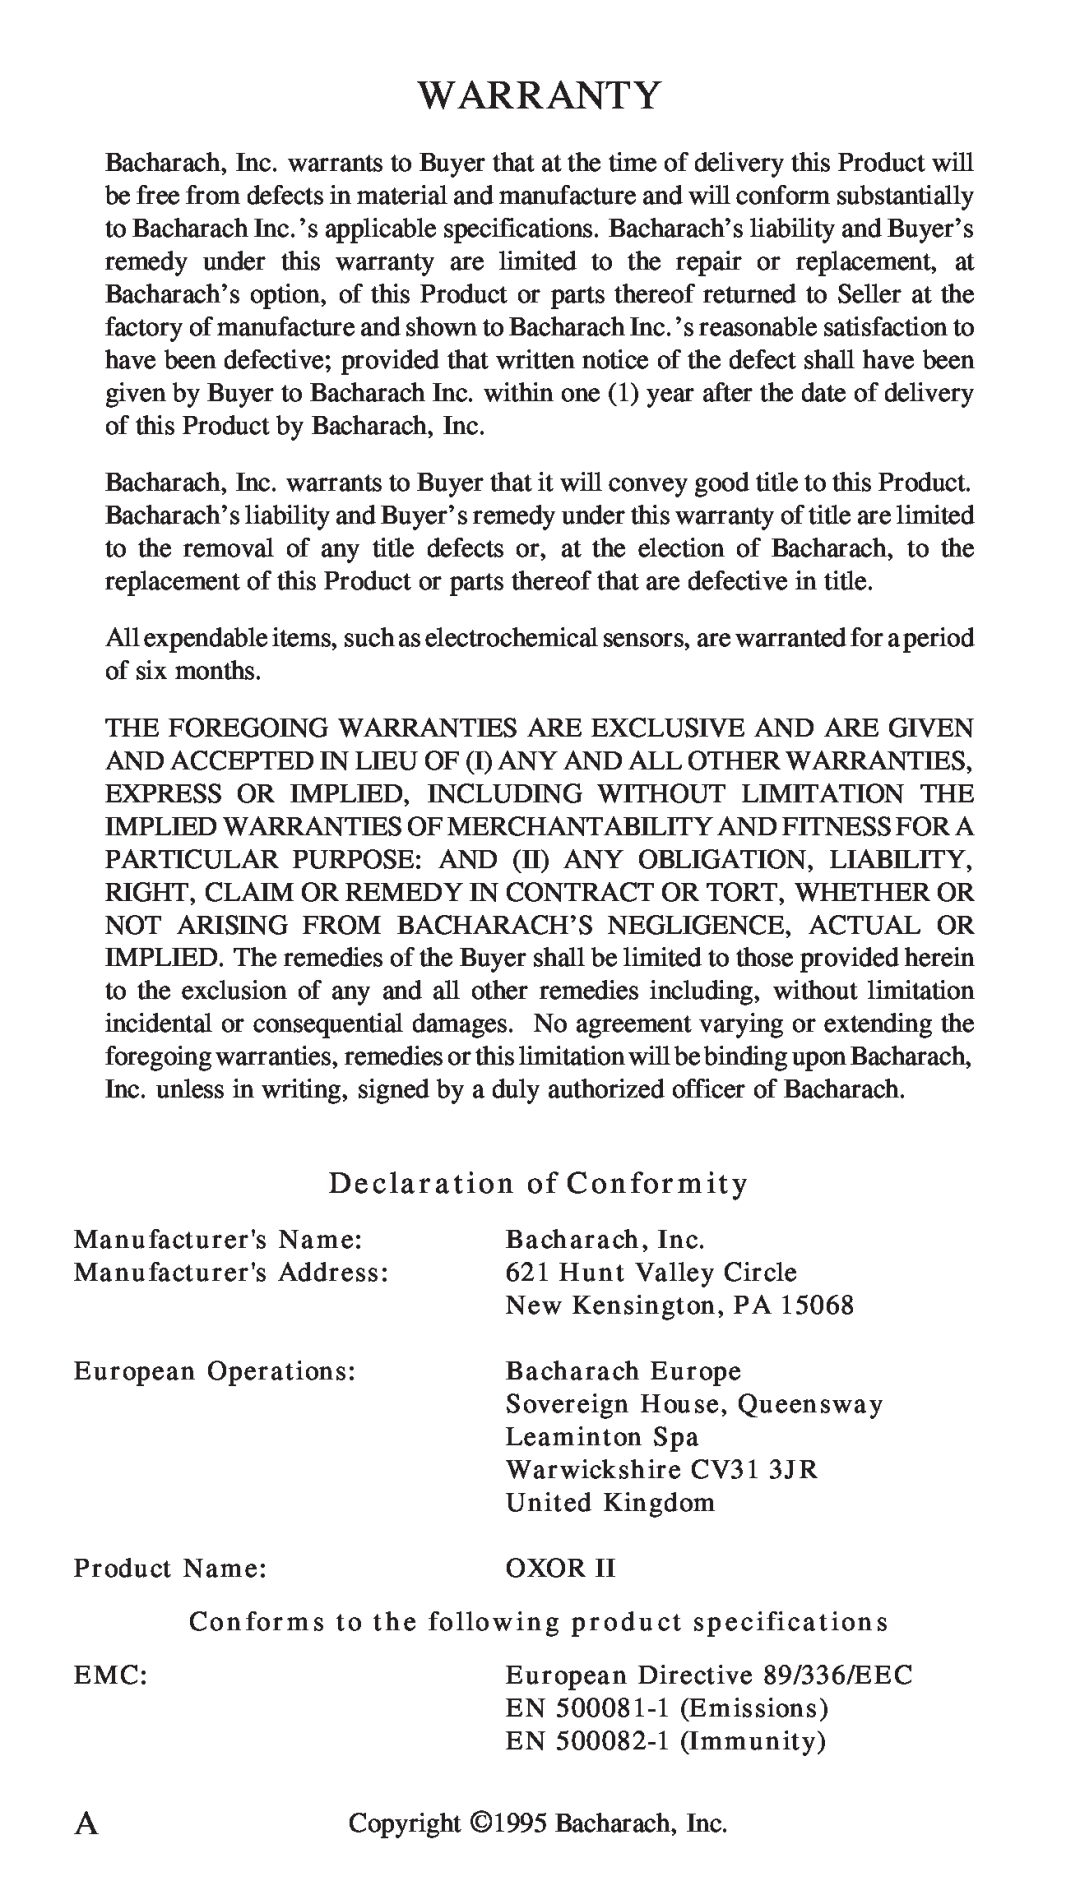 Bacharach 19-7037, 19-7044 manual Warranty, Declaration of Conformity 